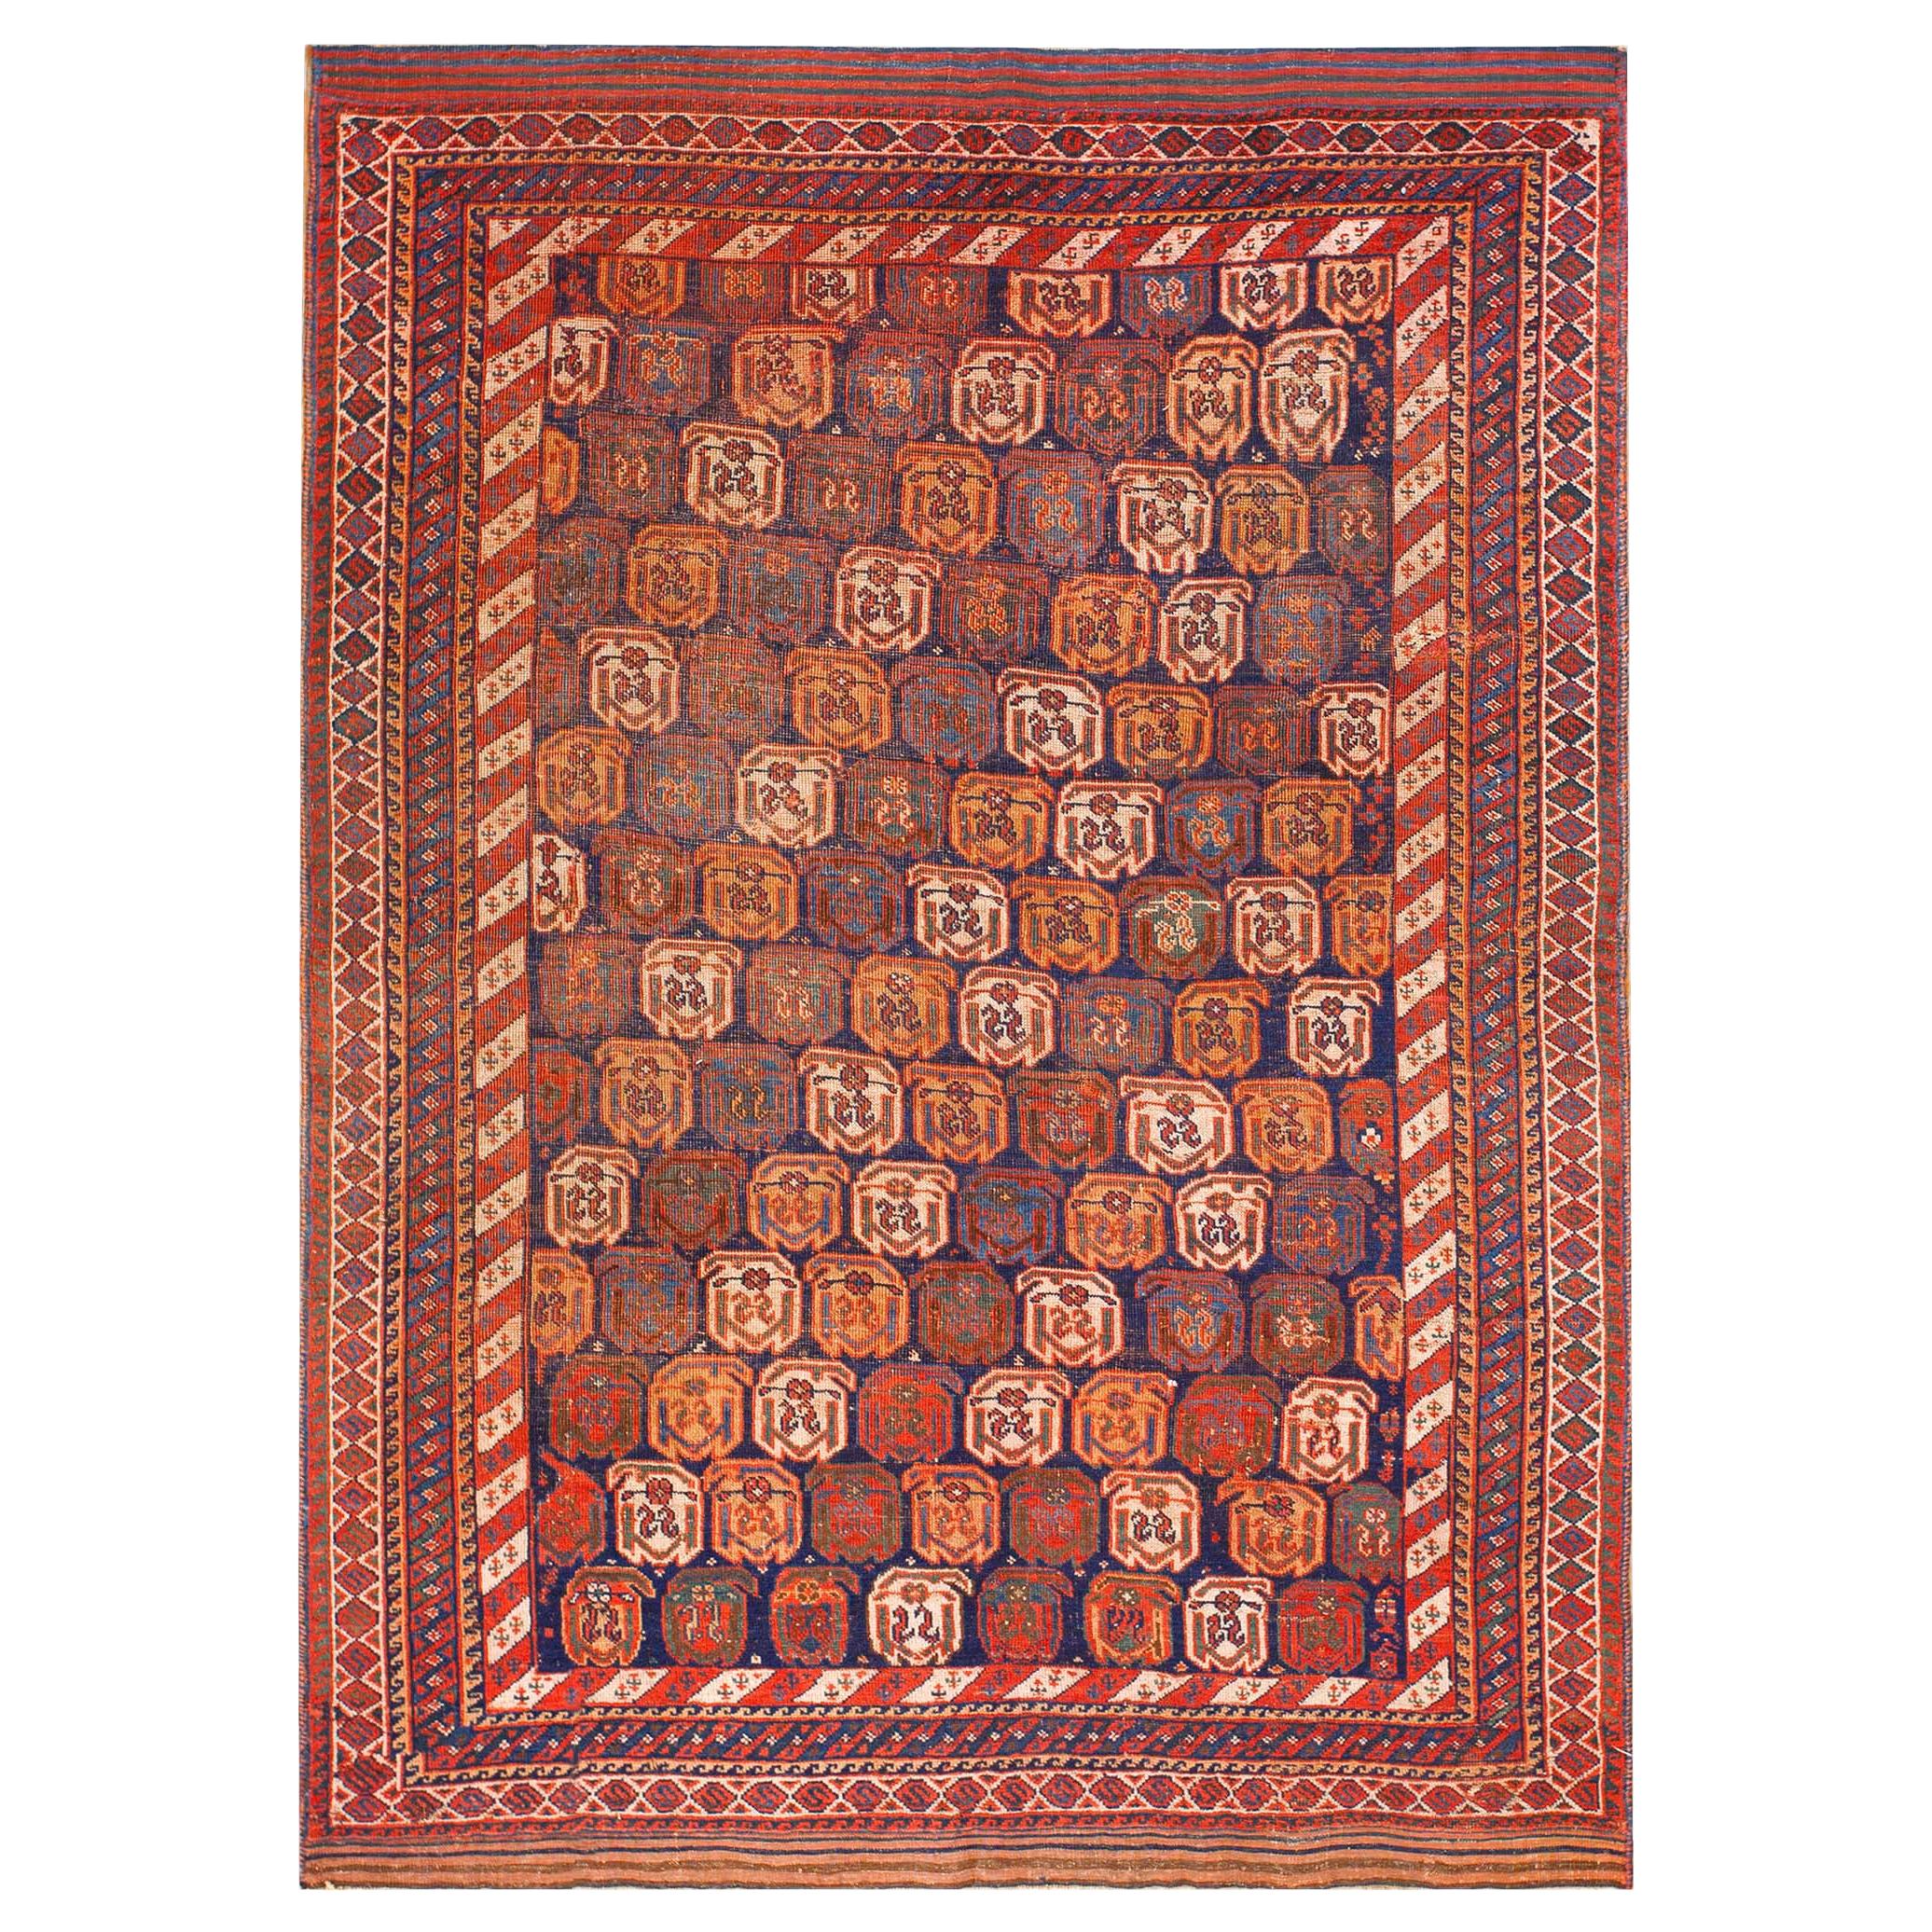 Late 19th Century SE. Persian Afshar Carpet ( 4'6" x 6'3" - 137 x 191 )